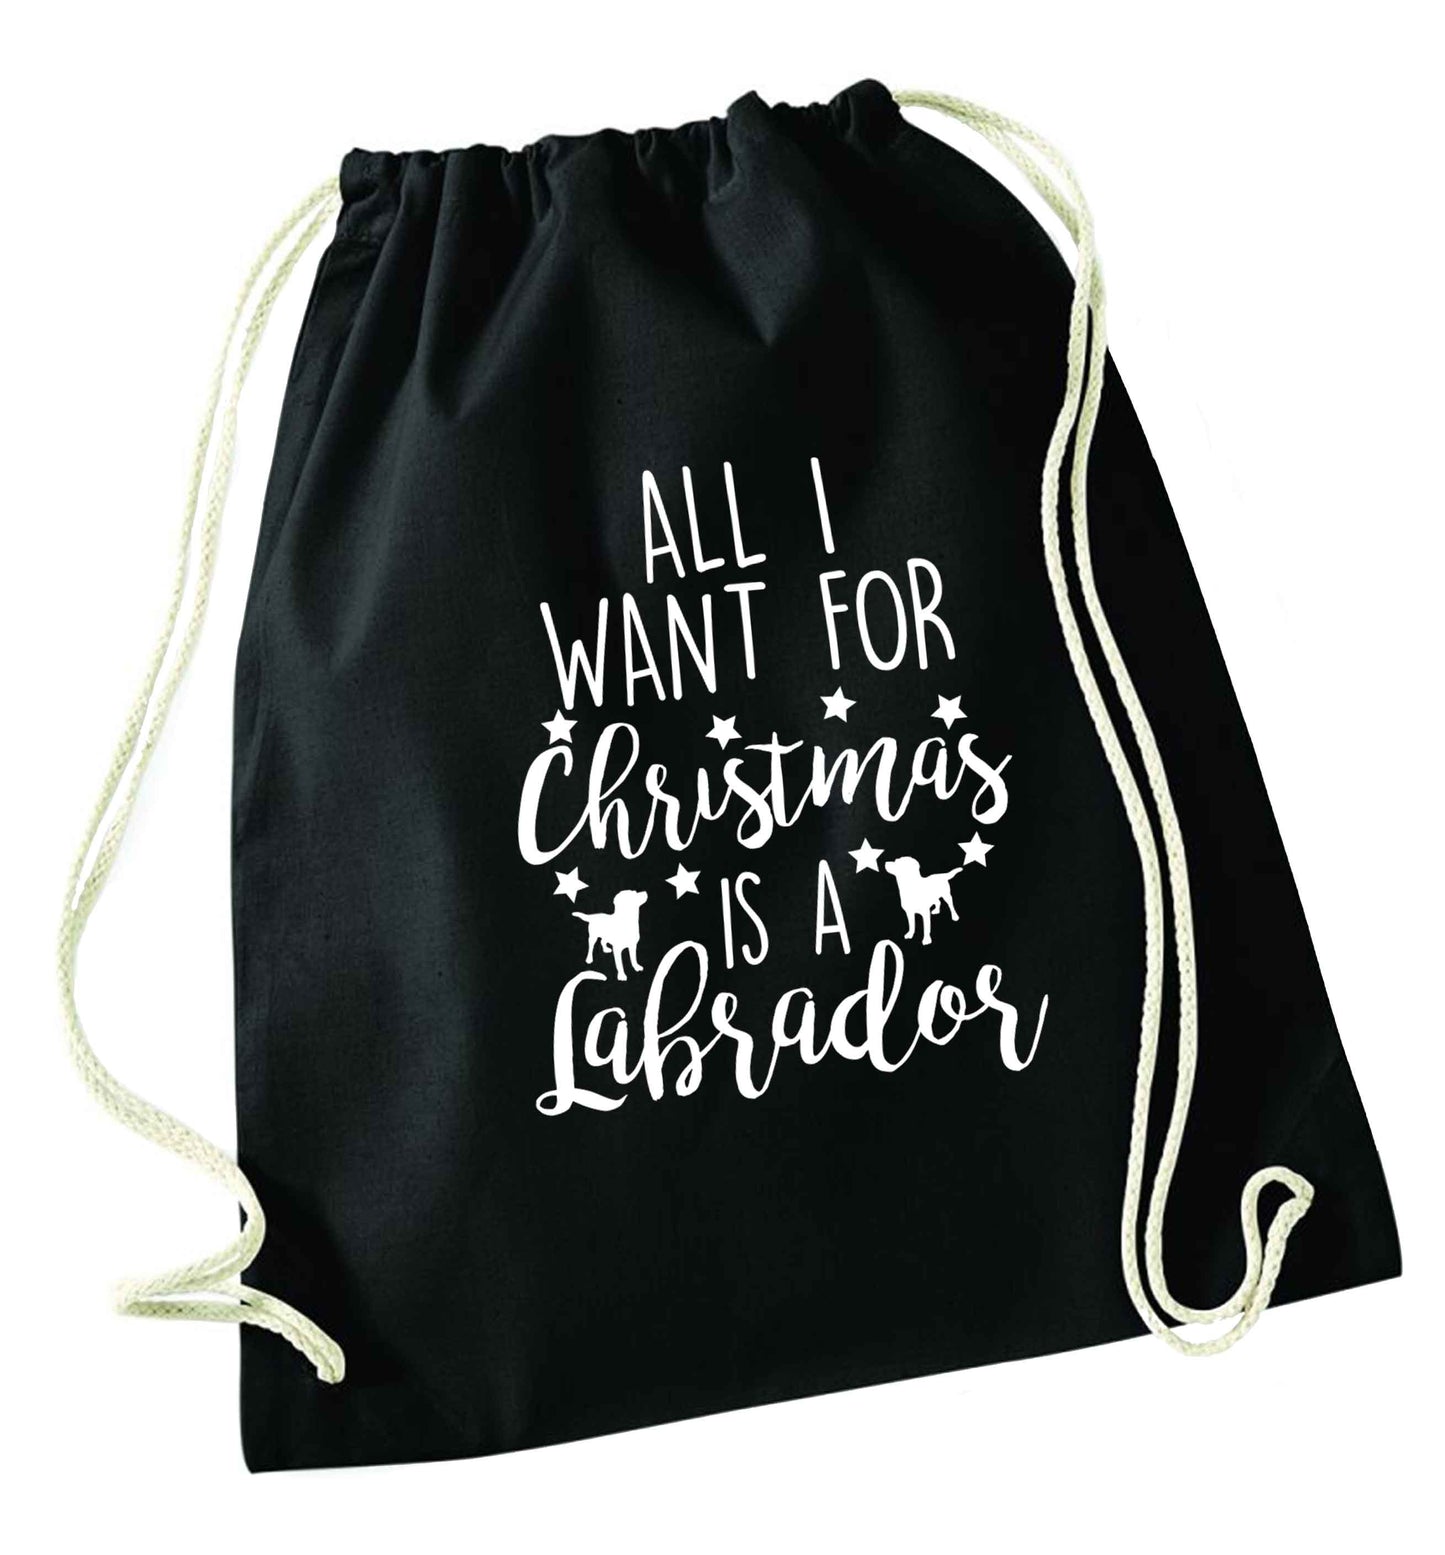 All I want for Christmas is a labrador black drawstring bag